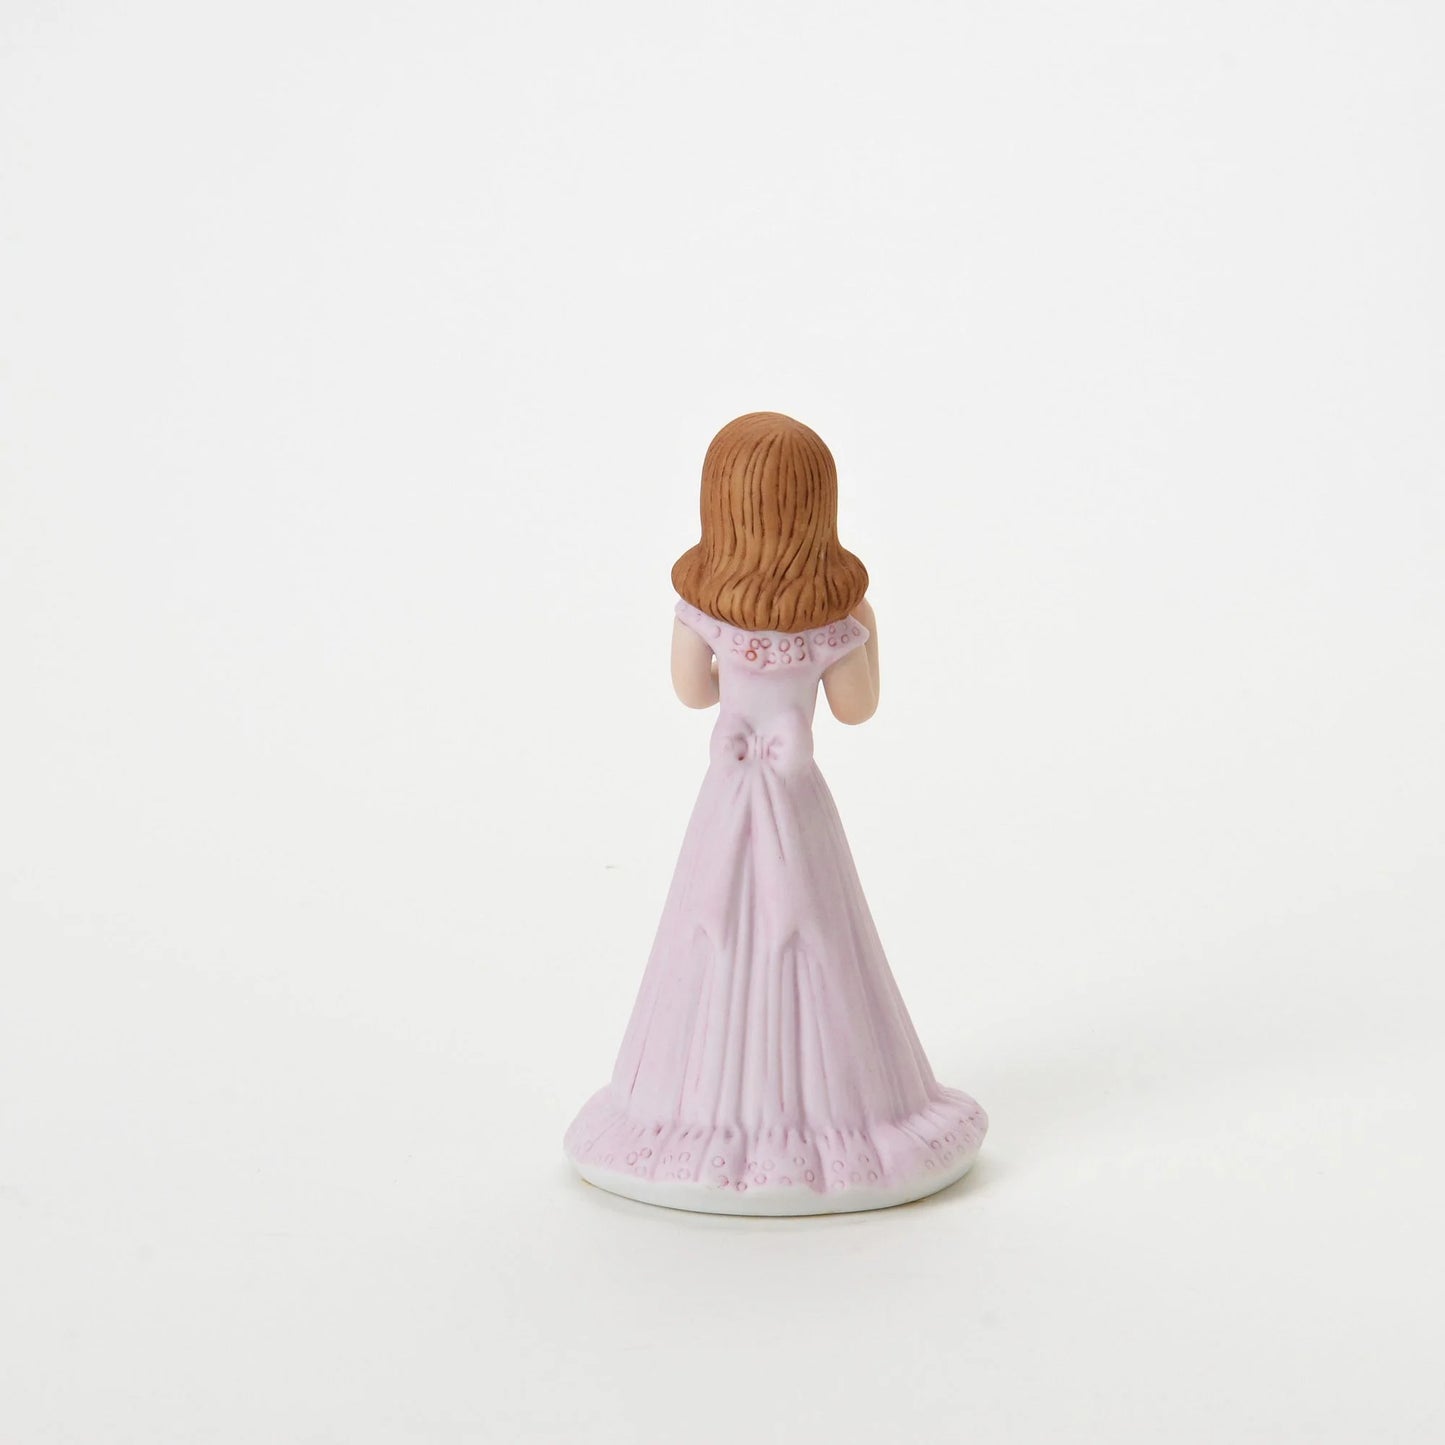 age 9 figurine back